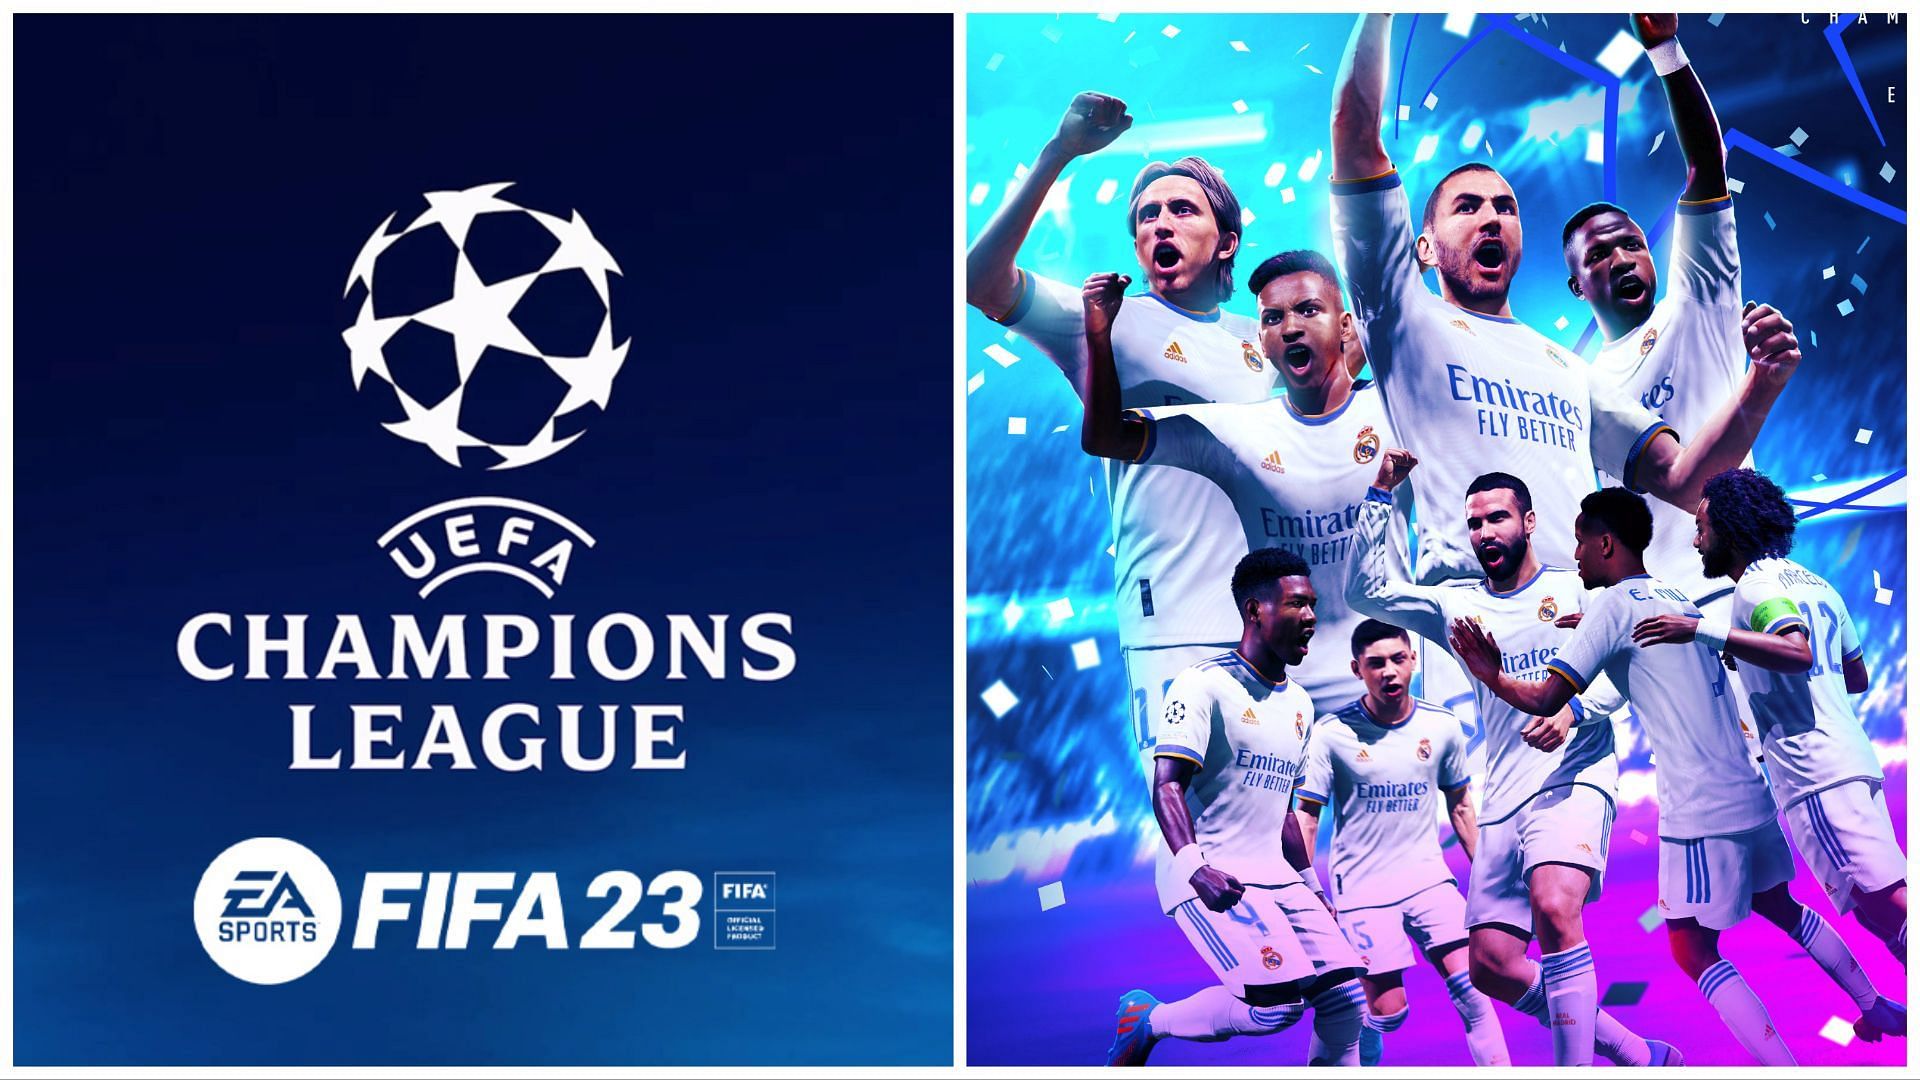 jeg fandt det Blueprint Modsætte sig How to play the UEFA Champions League in FIFA 23